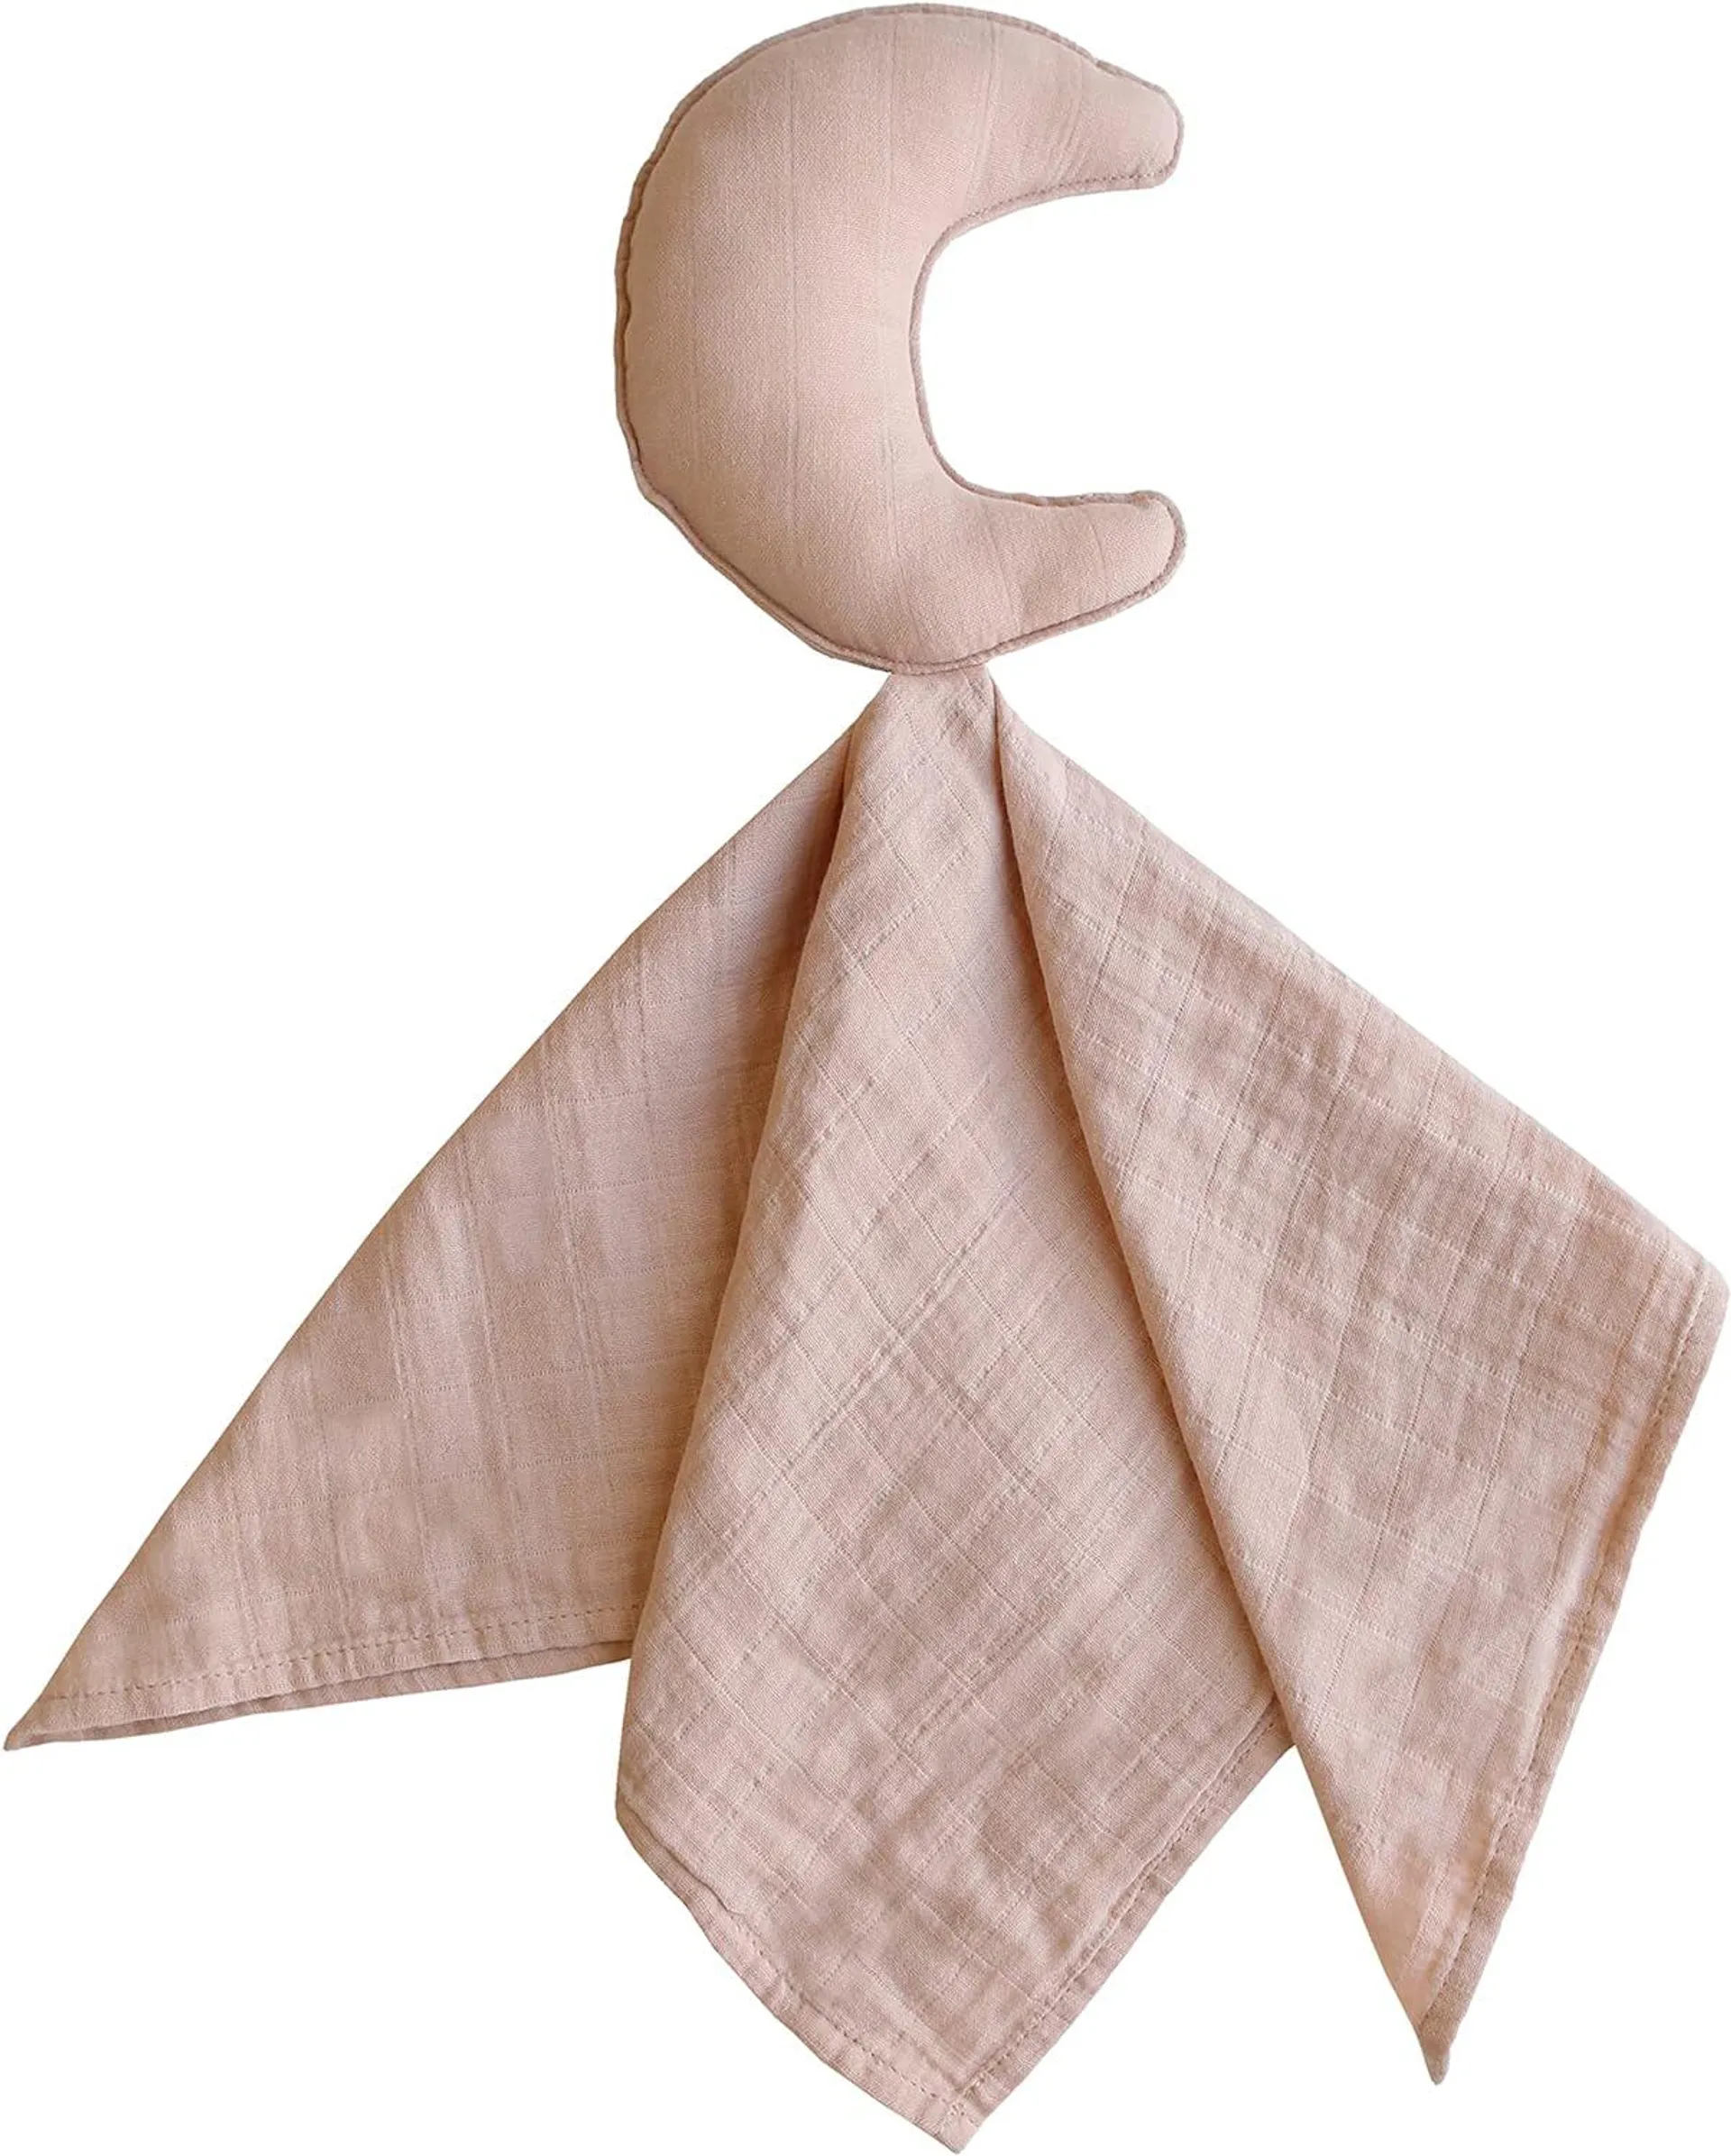 Mushie Moon Security Blanket Moon toy